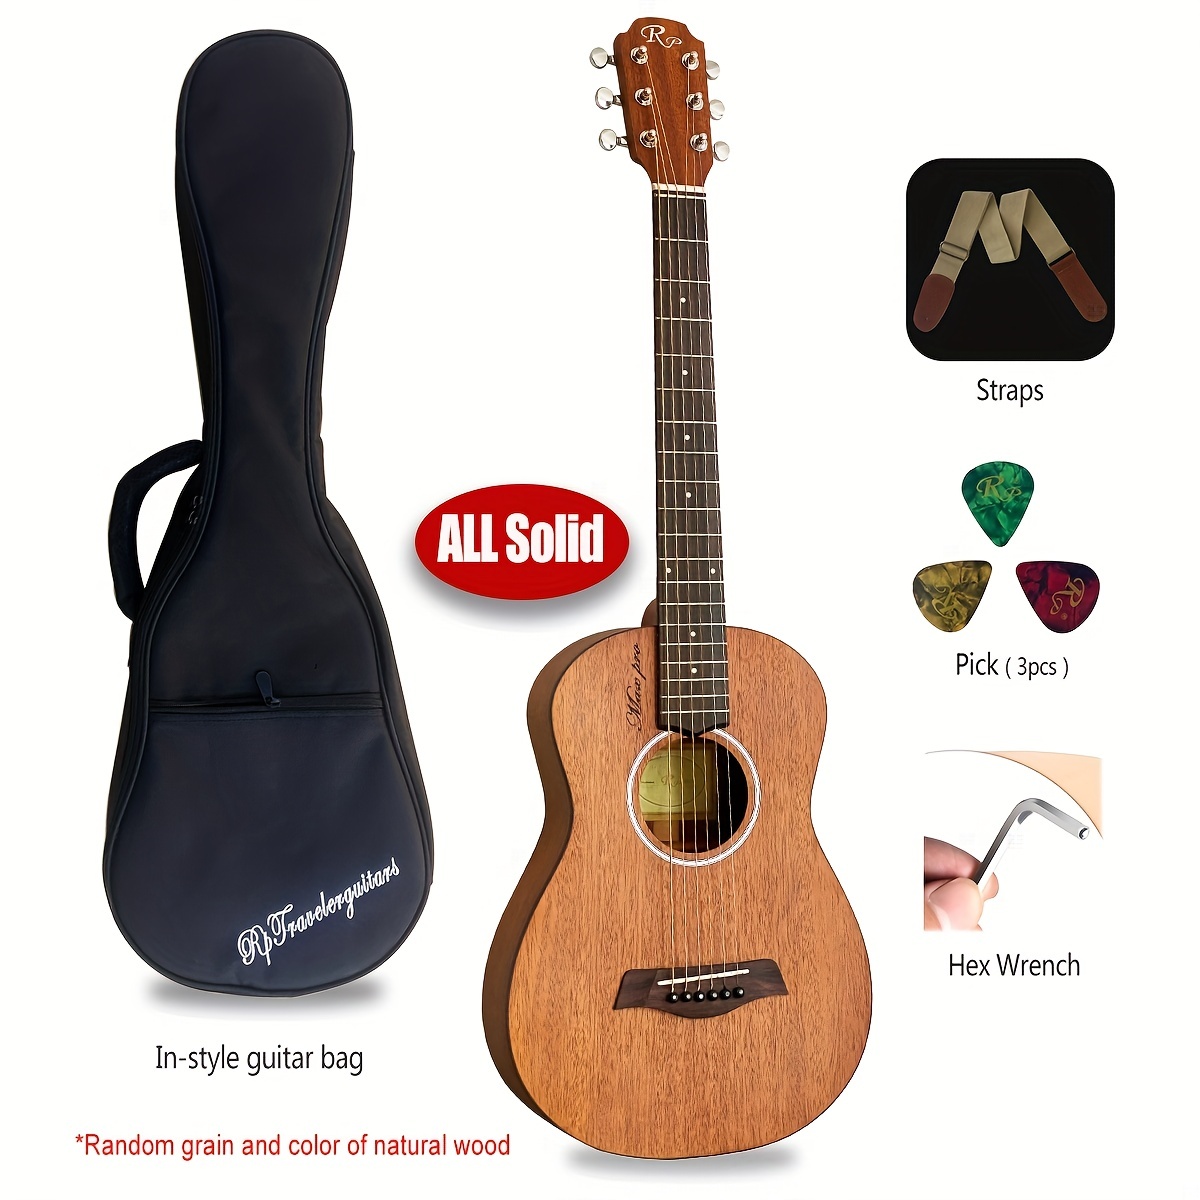 Galux Gs-210 Support De Guitare, Support D'instrument Vertical, Support De  Guitare Simple Portable, Support